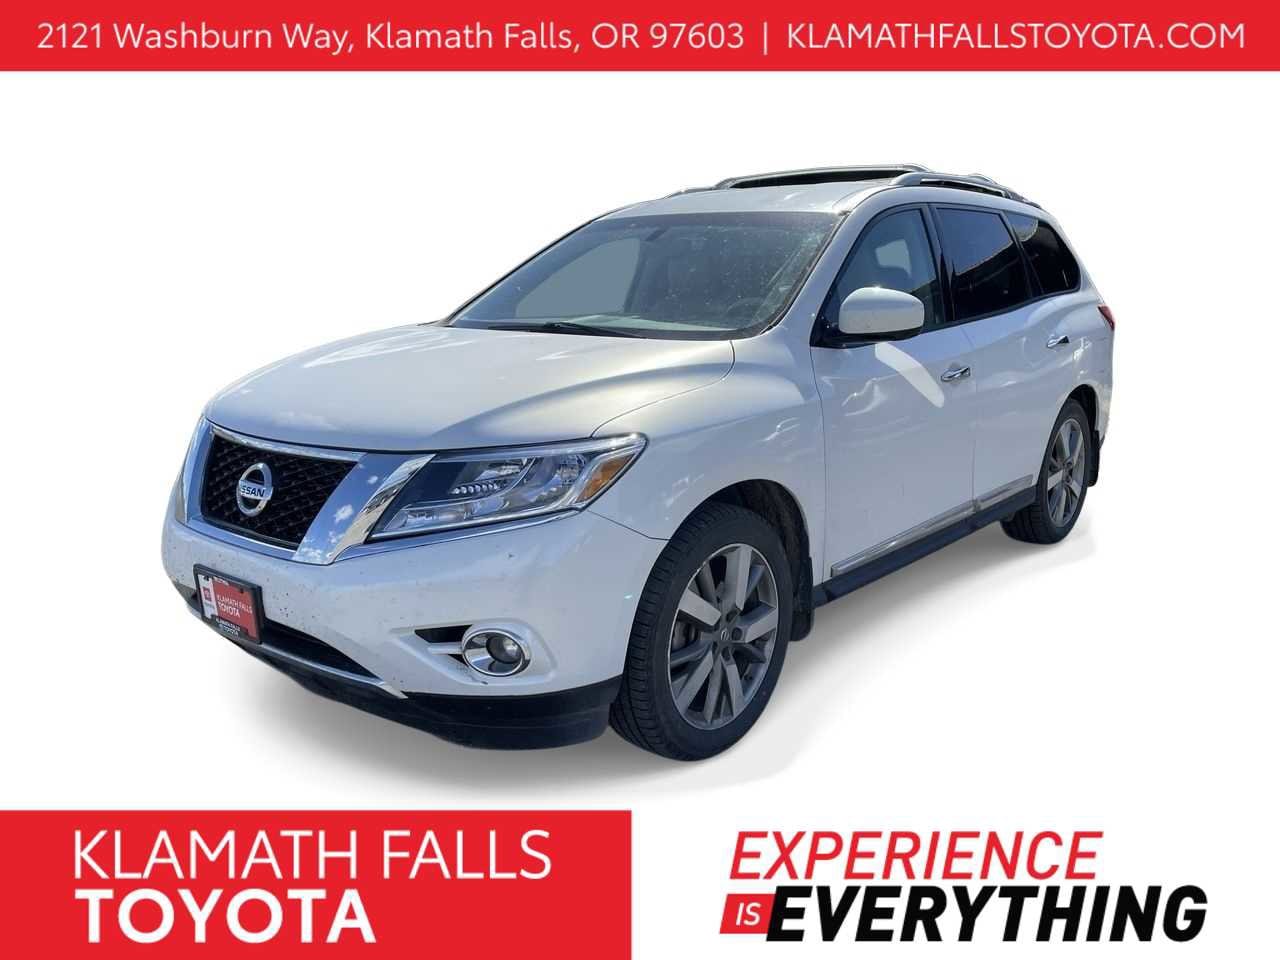 2013 Nissan Pathfinder Platinum -
                Klamath Falls, OR